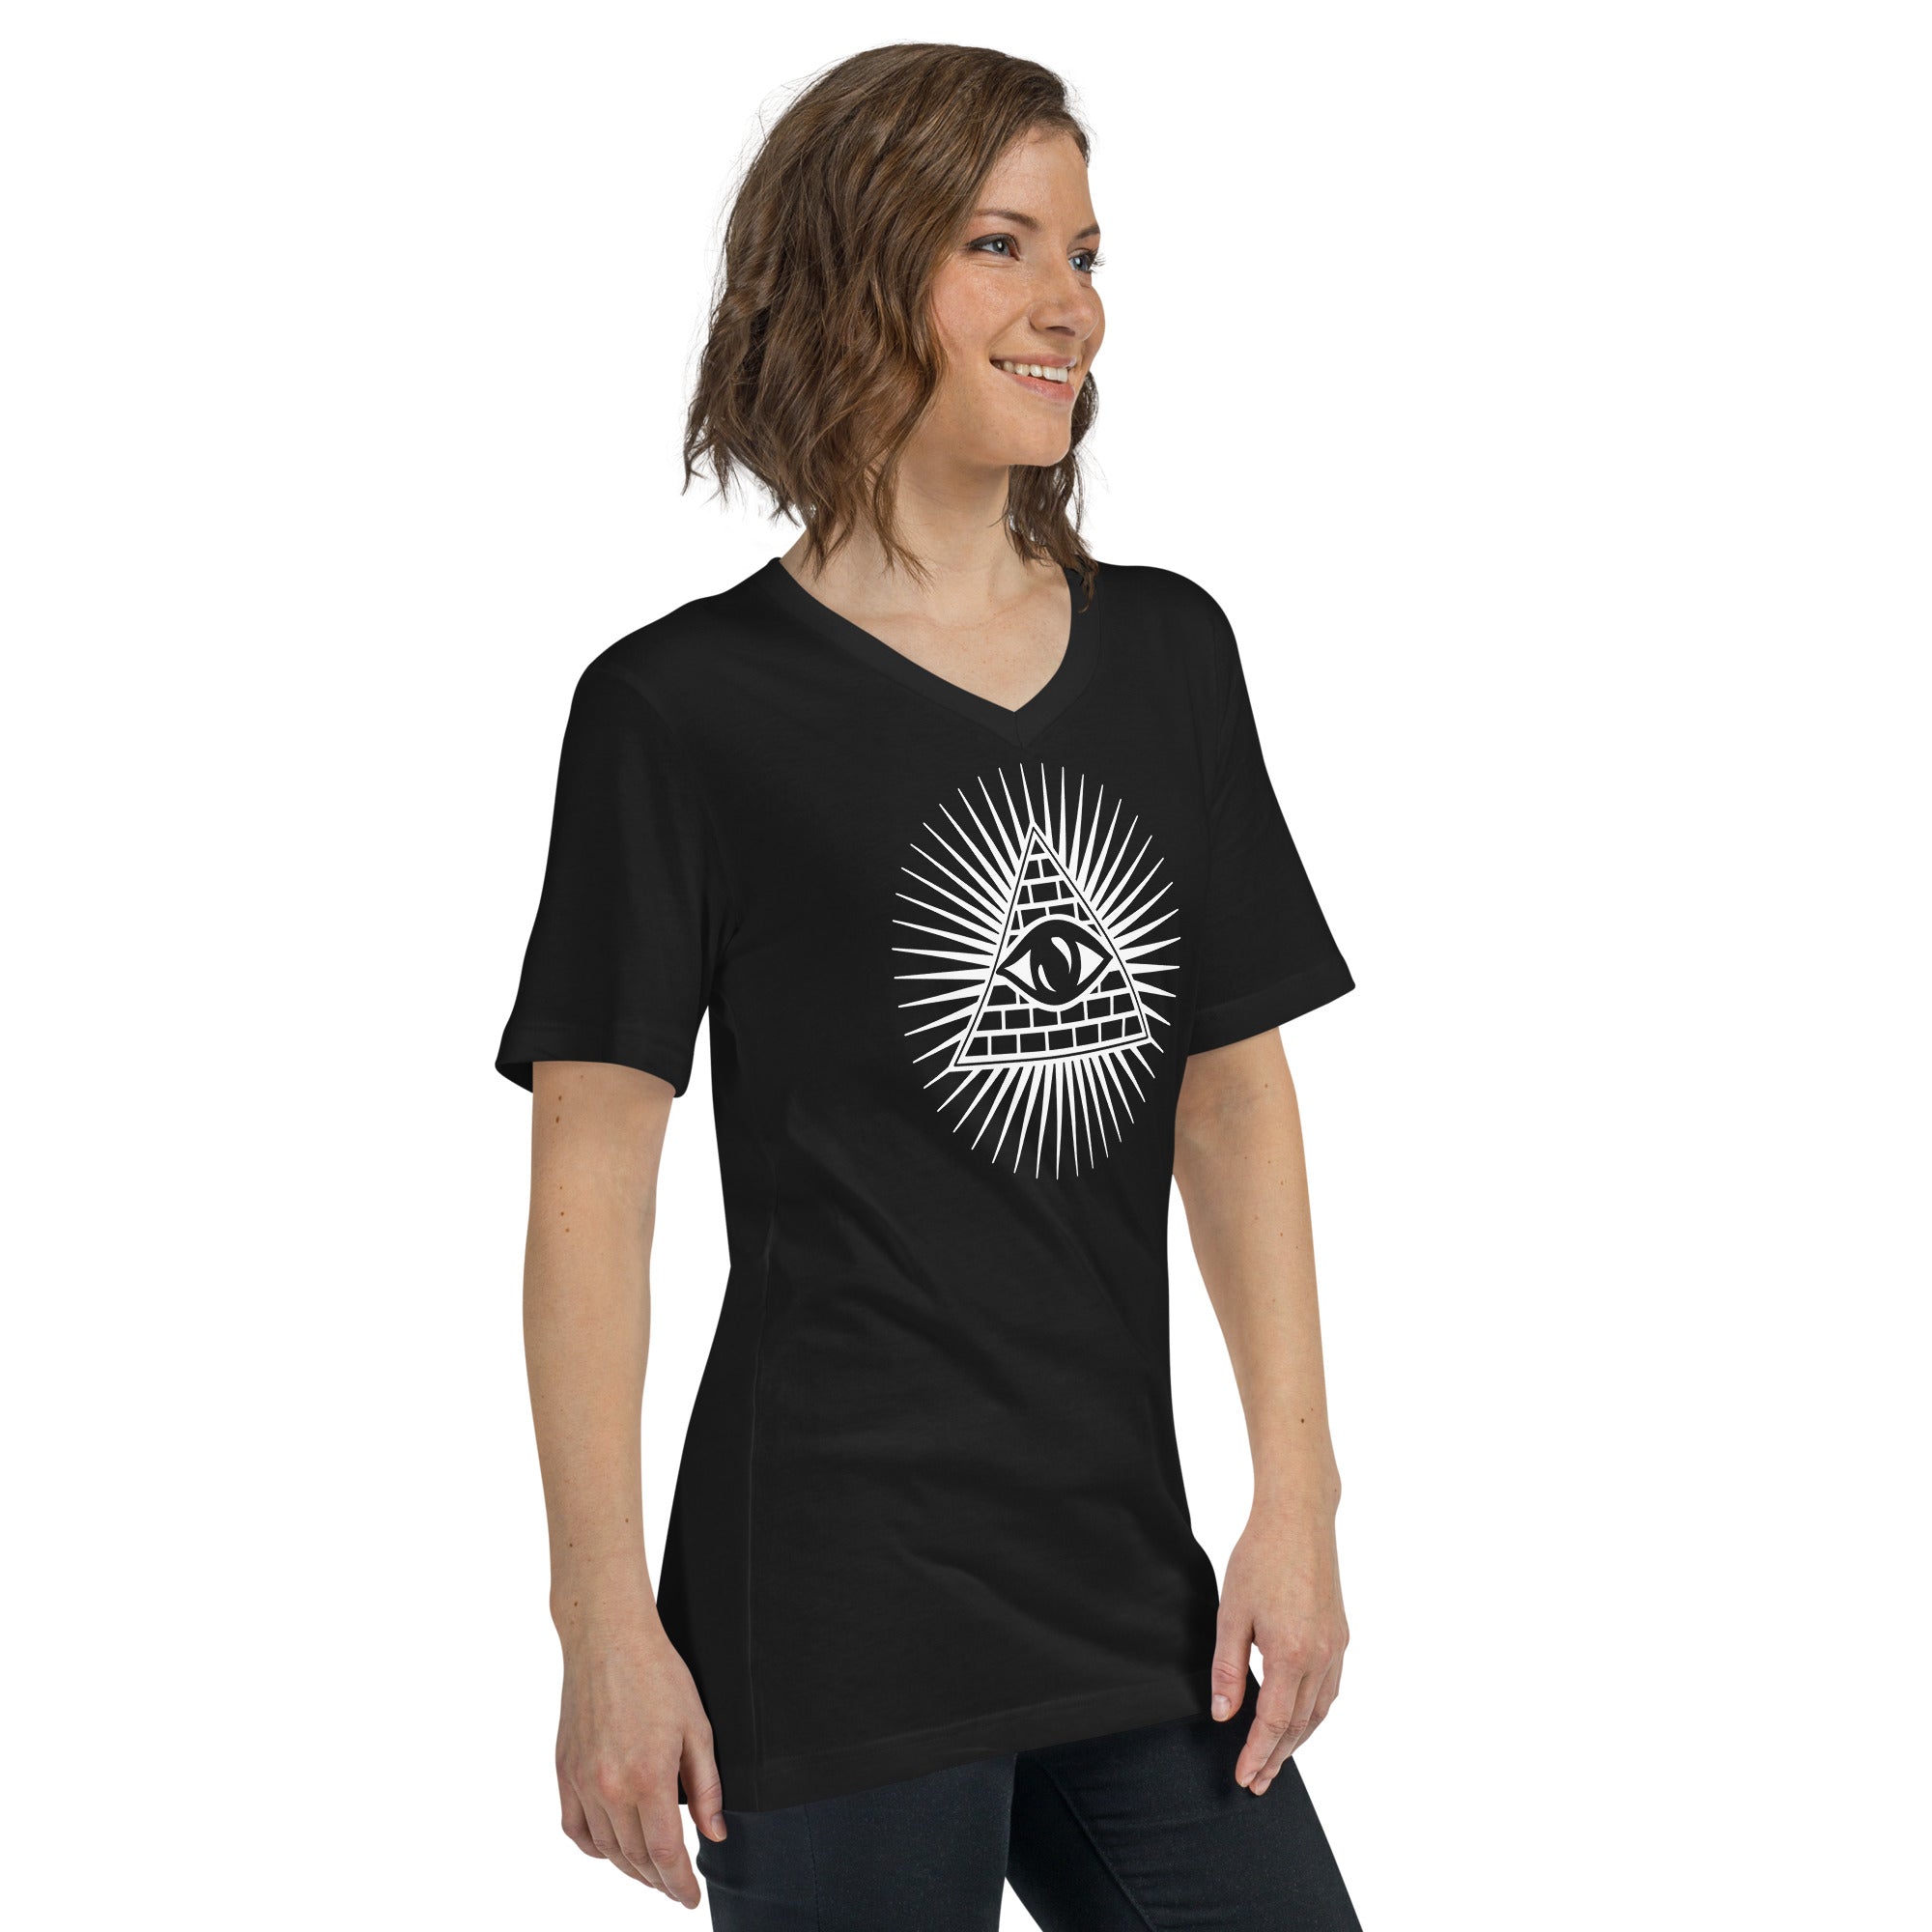 Illuminati All Seeing Psychic Eye Women’s Short Sleeve V-Neck T-Shirt - Edge of Life Designs